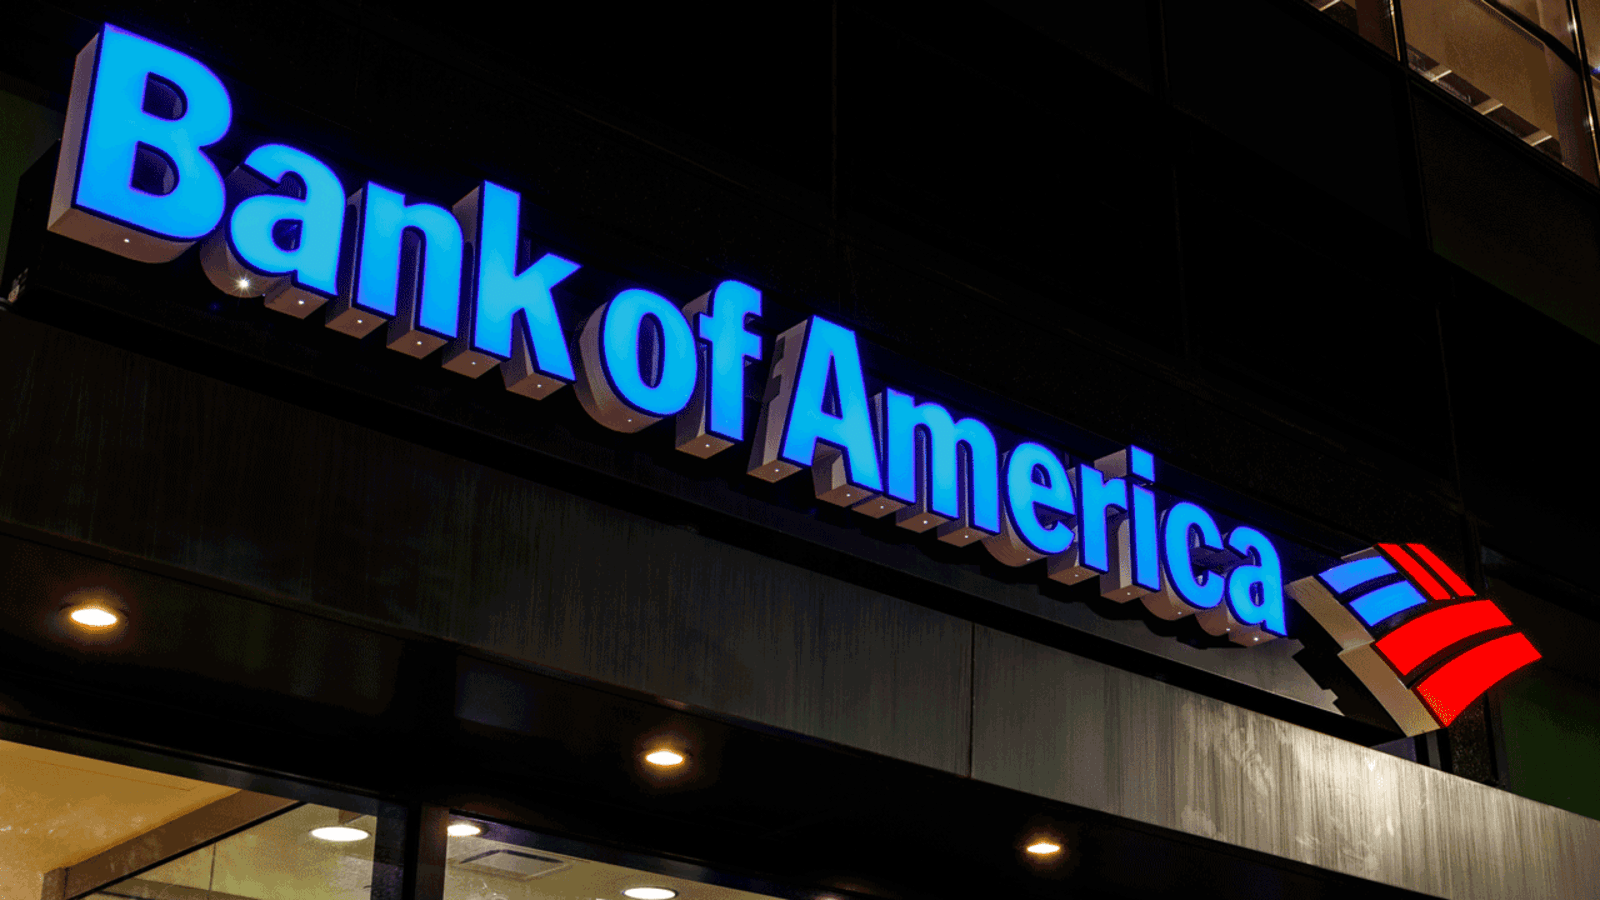 Bank of America.